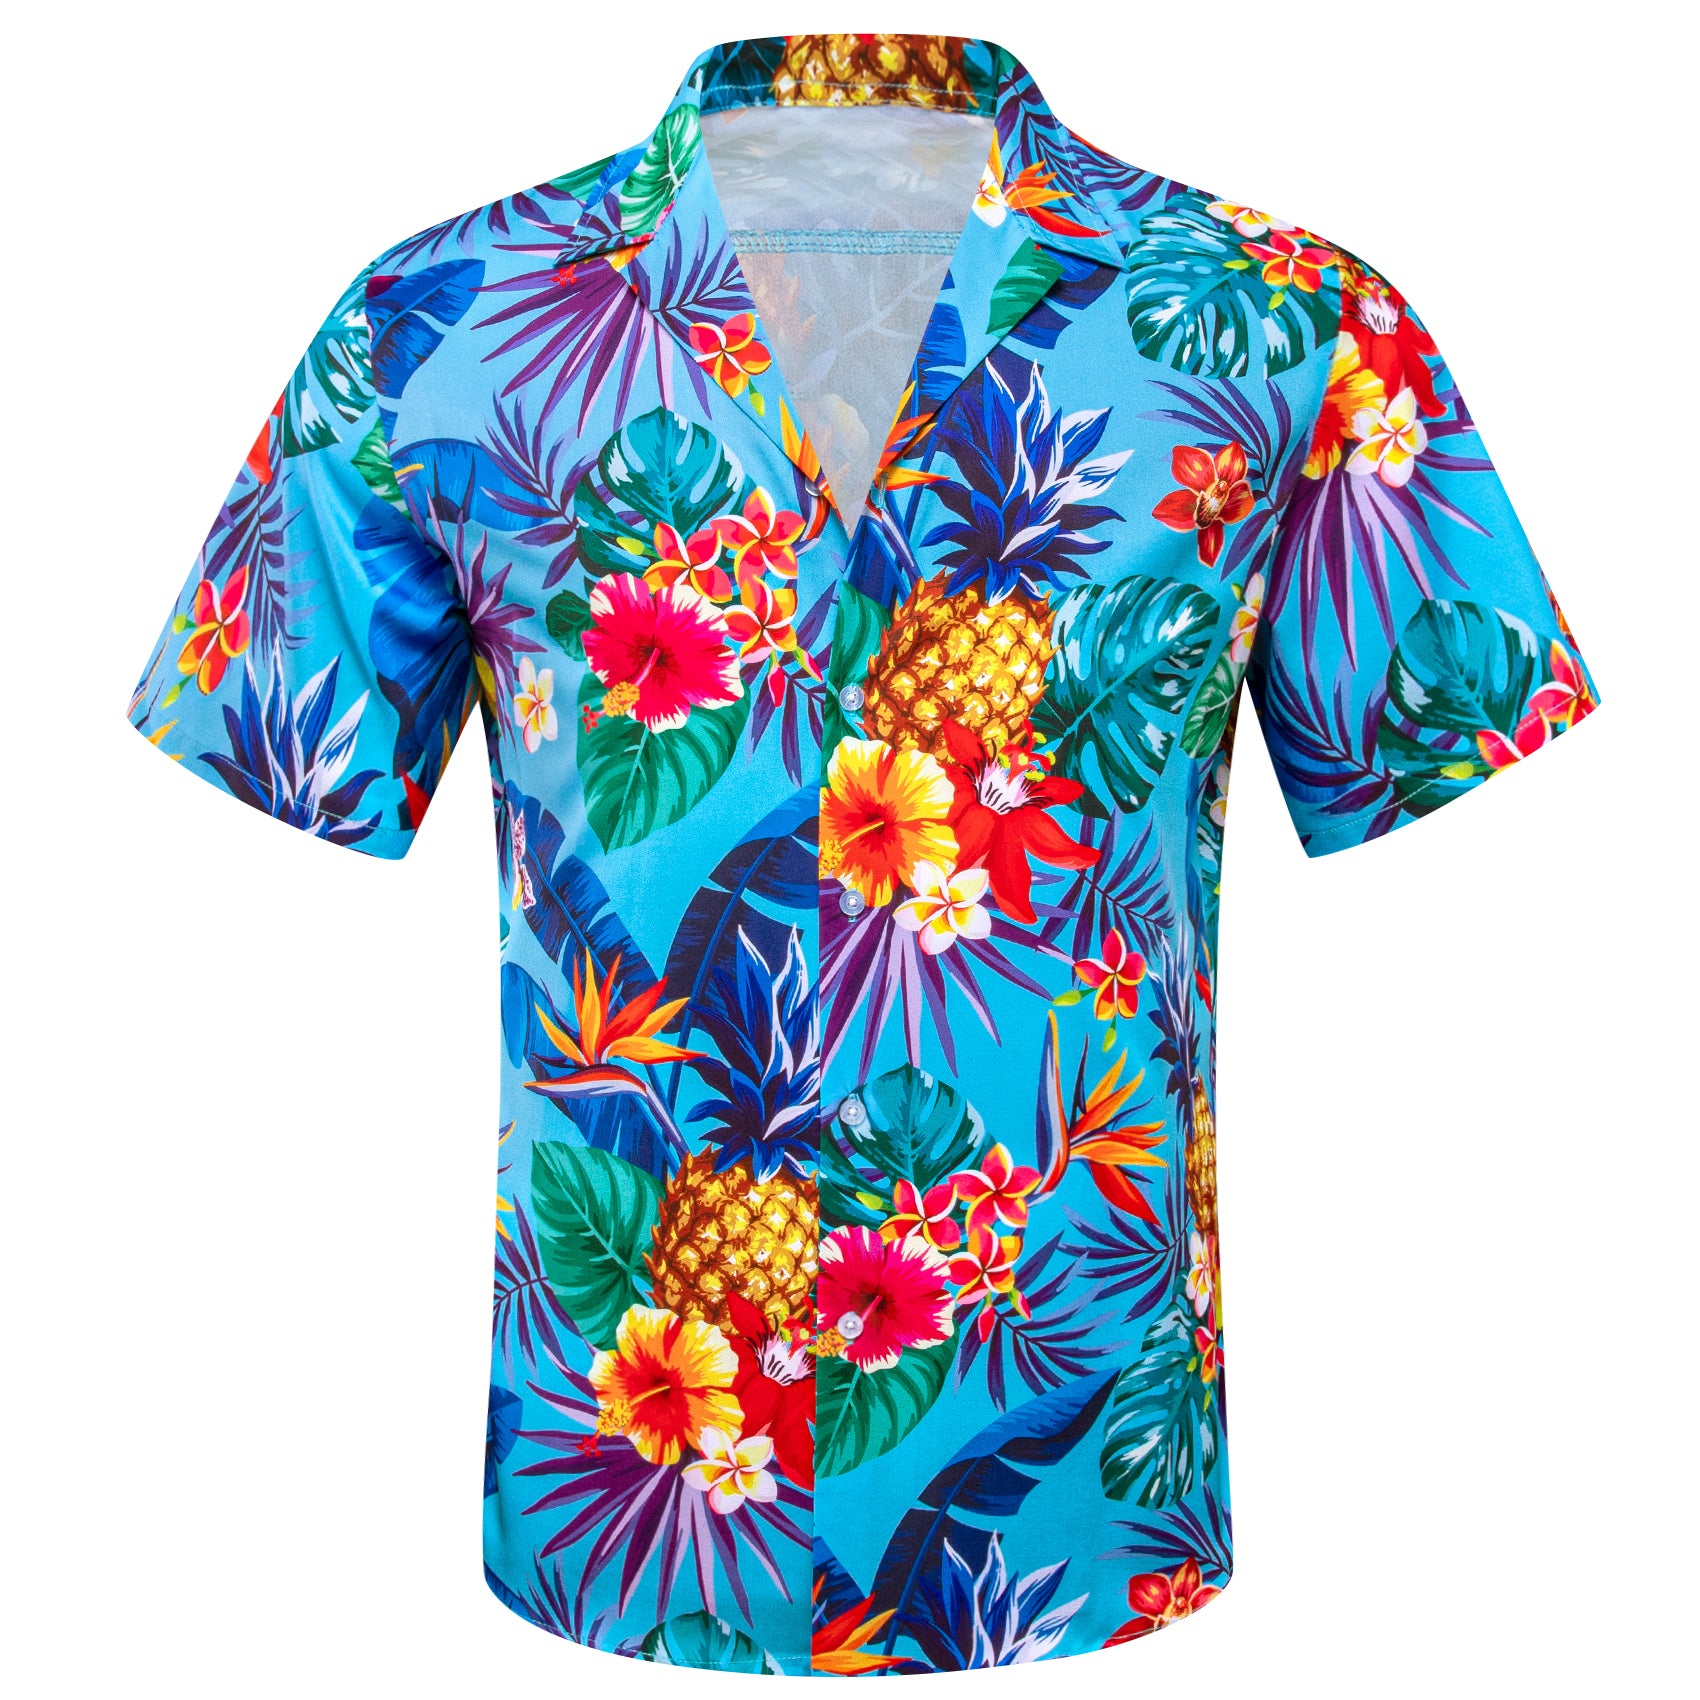 Cute hawaii shirt design